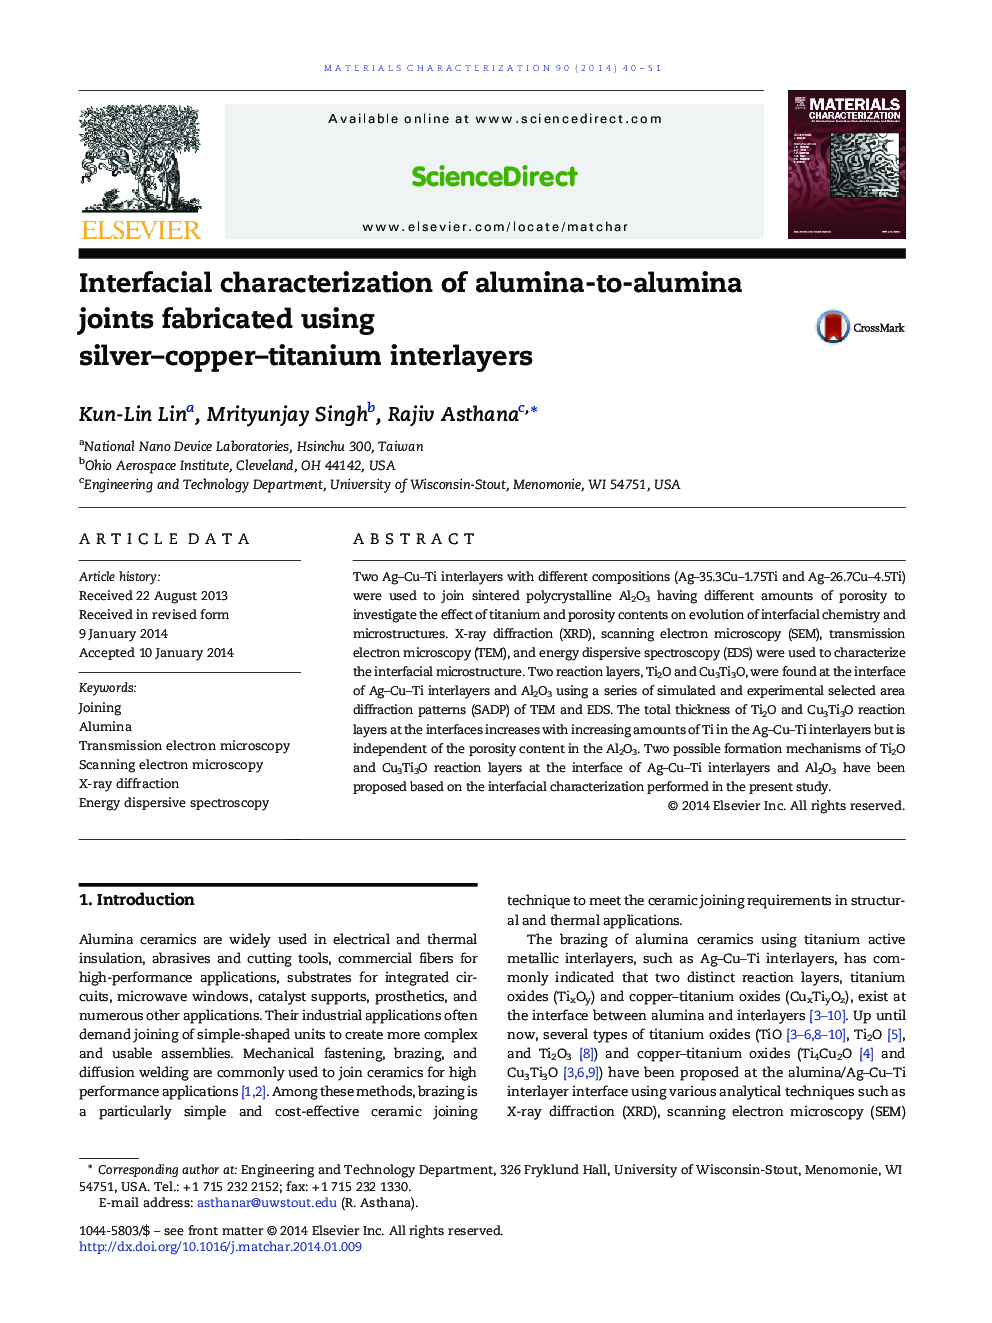 Interfacial characterization of alumina-to-alumina joints fabricated using silver-copper-titanium interlayers